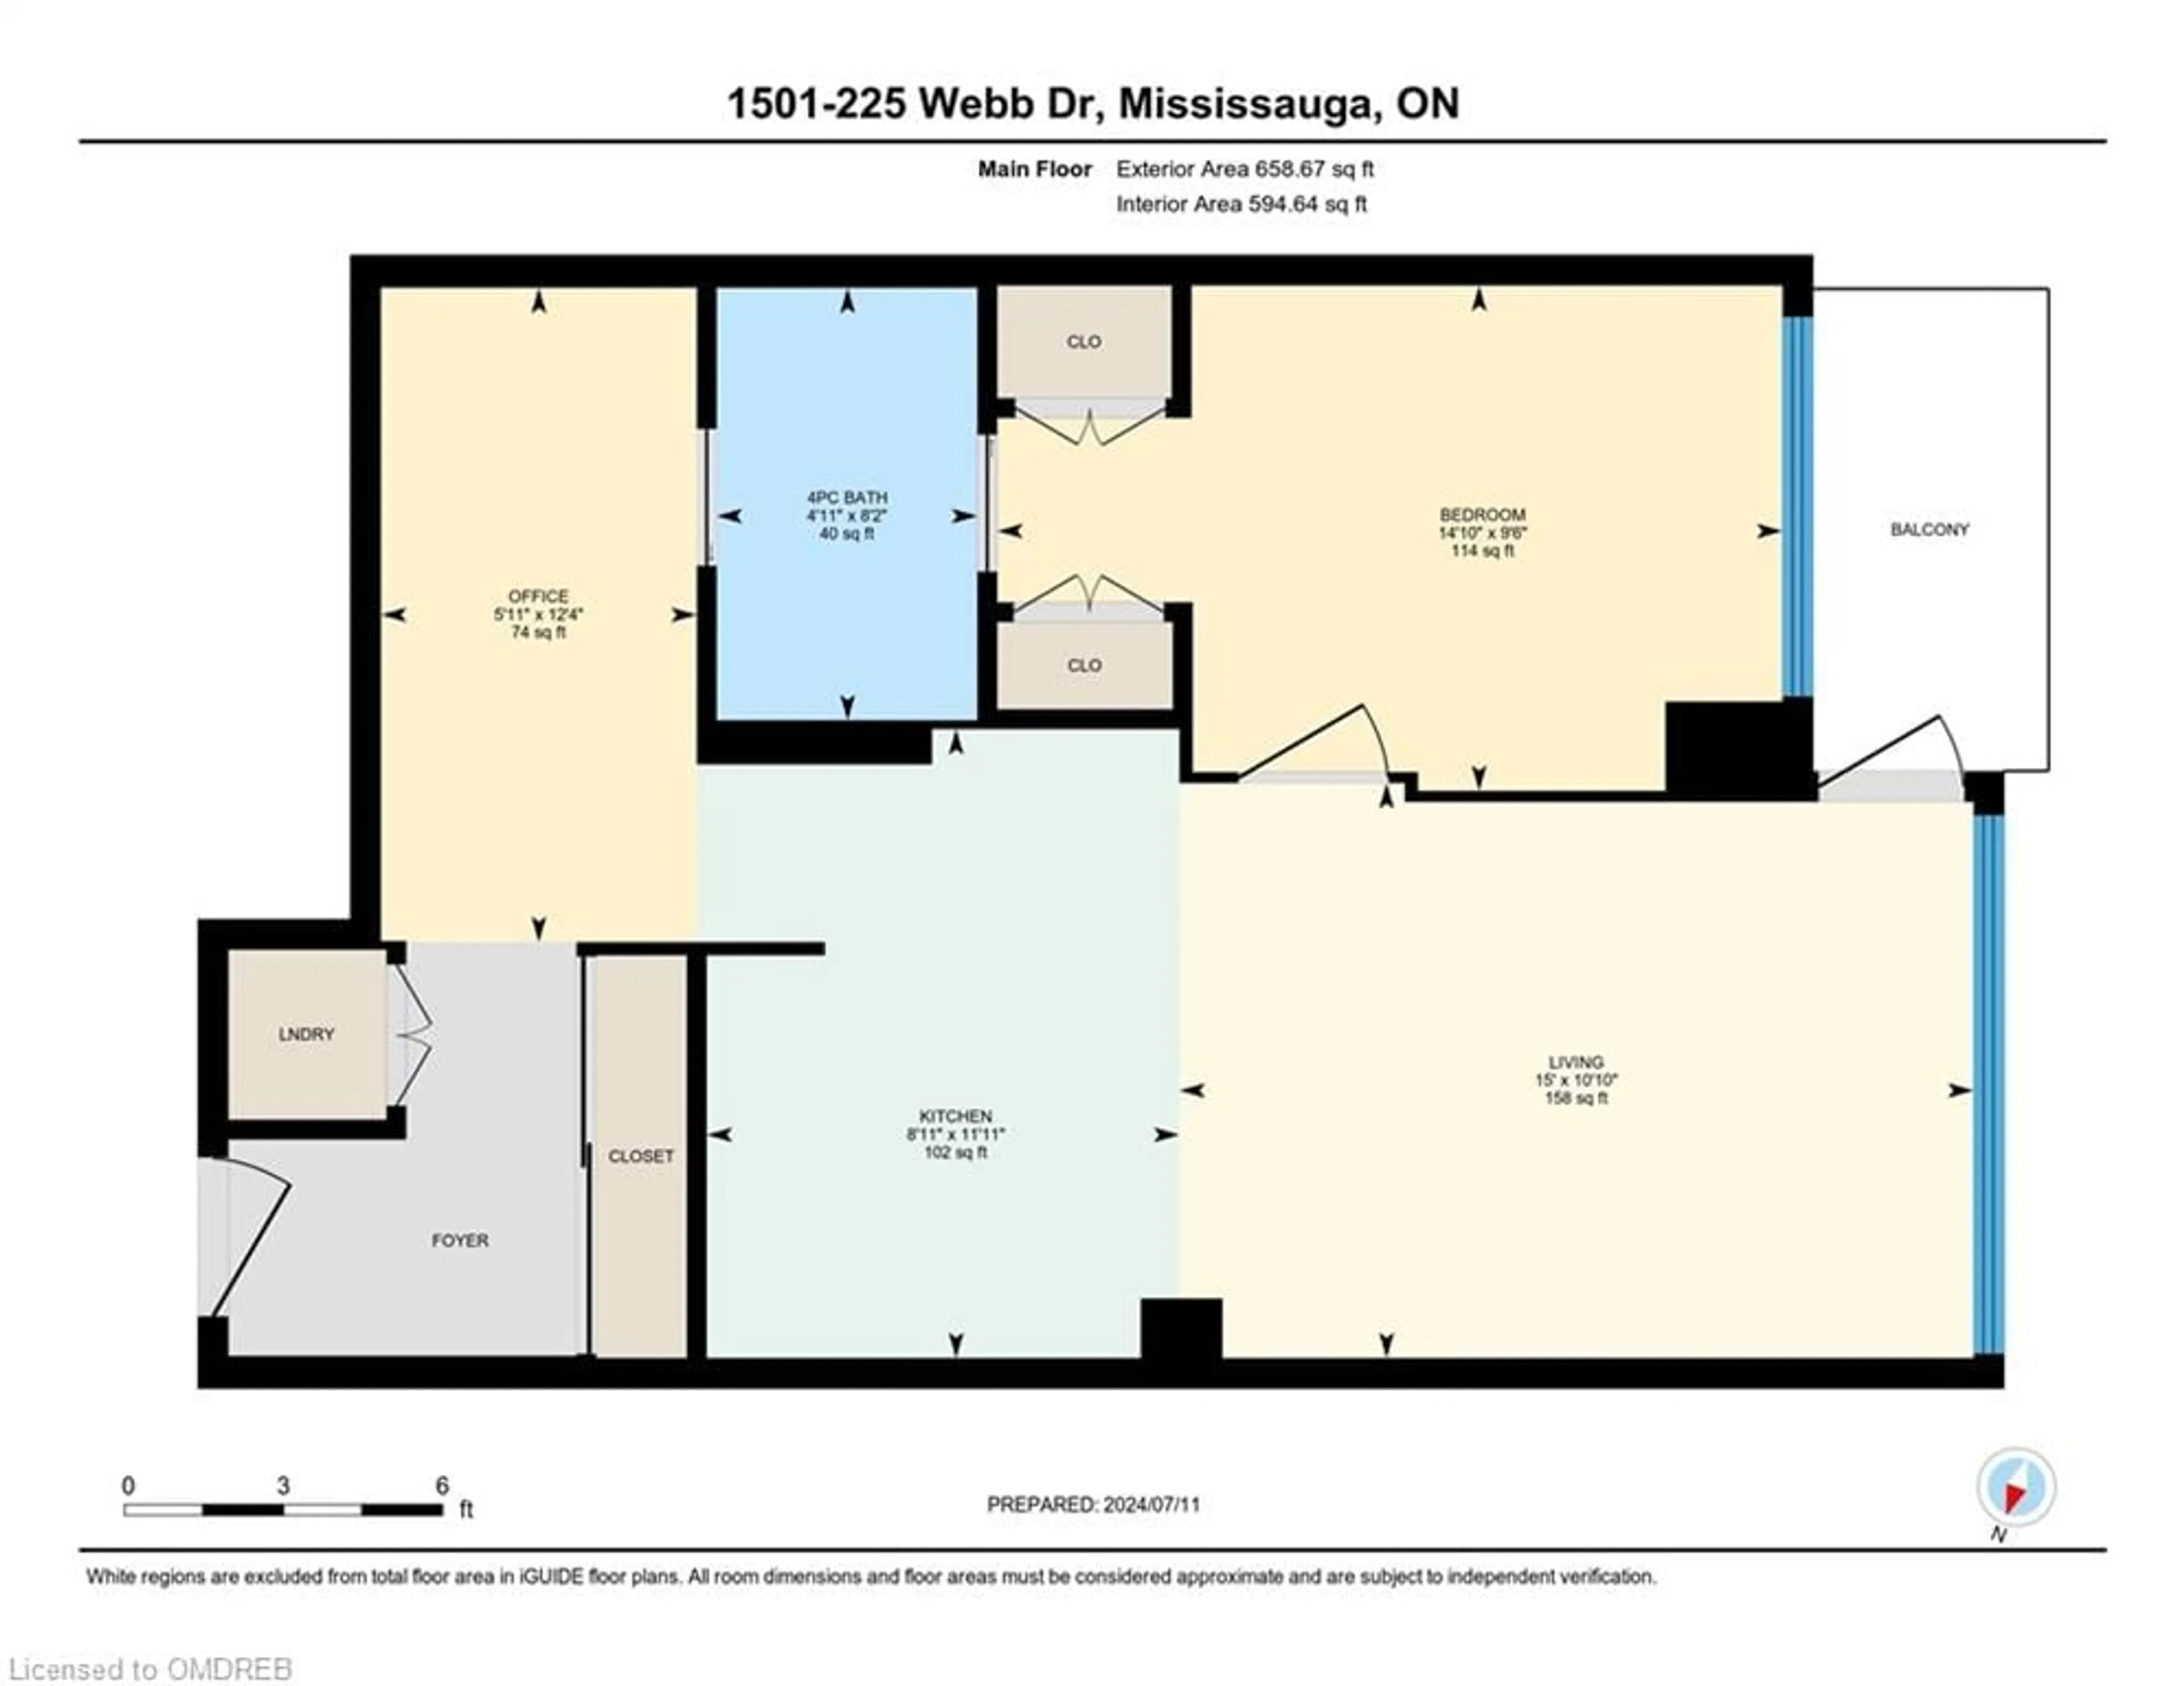 Floor plan for 225 Webb Dr #1501, Mississauga Ontario L5B 4P2